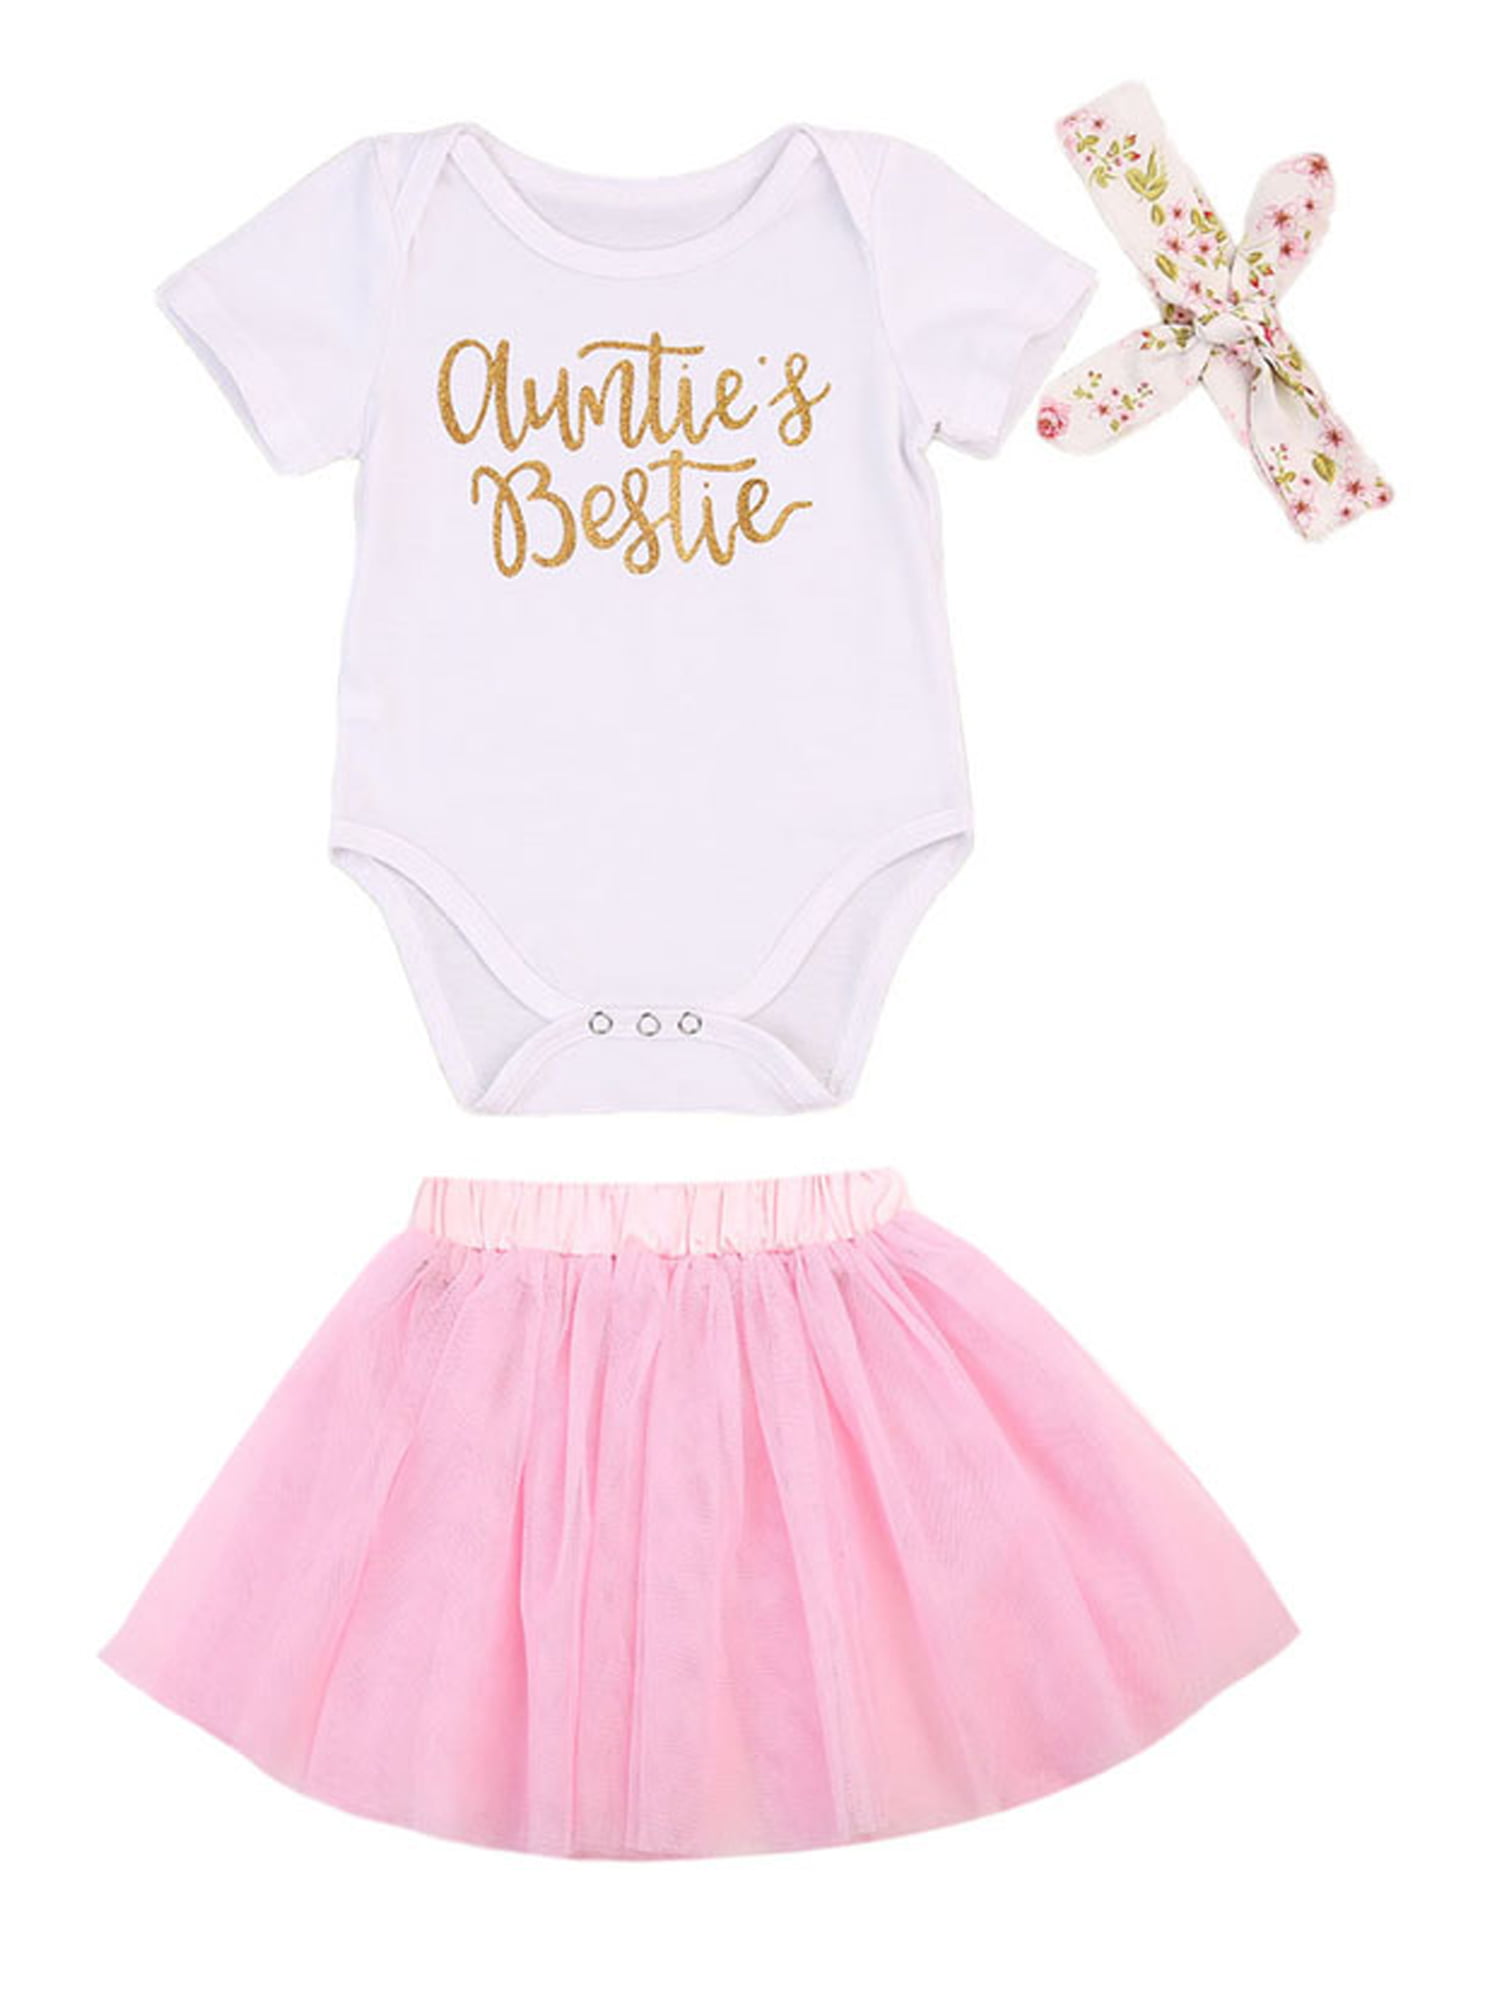 2Pcs/Set Newborn Baby Girls Summer Outfit Daddy Mommy Romper Bodysuit+Tutu Skirt Clothes